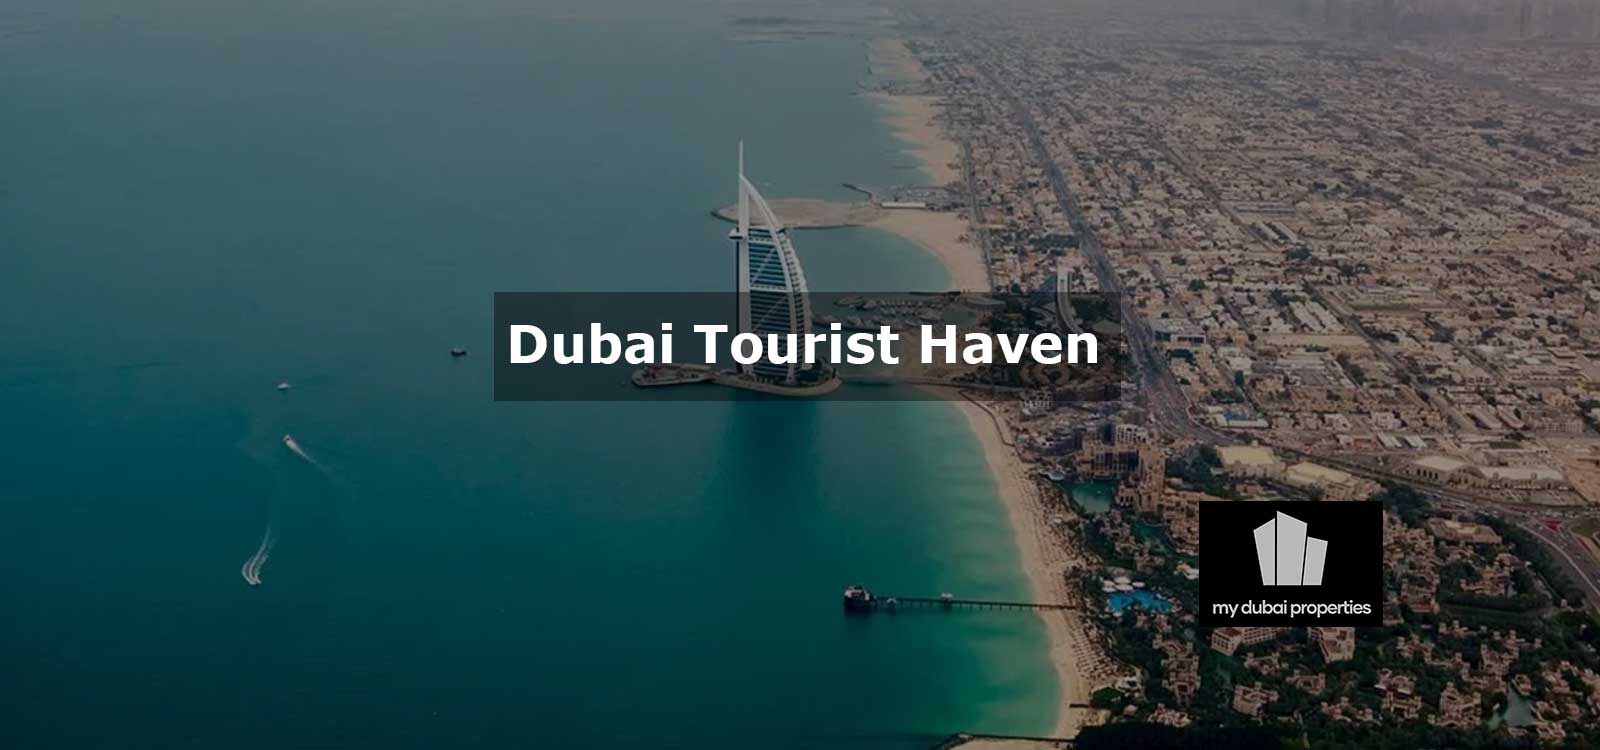 Dubai Tourist Haven